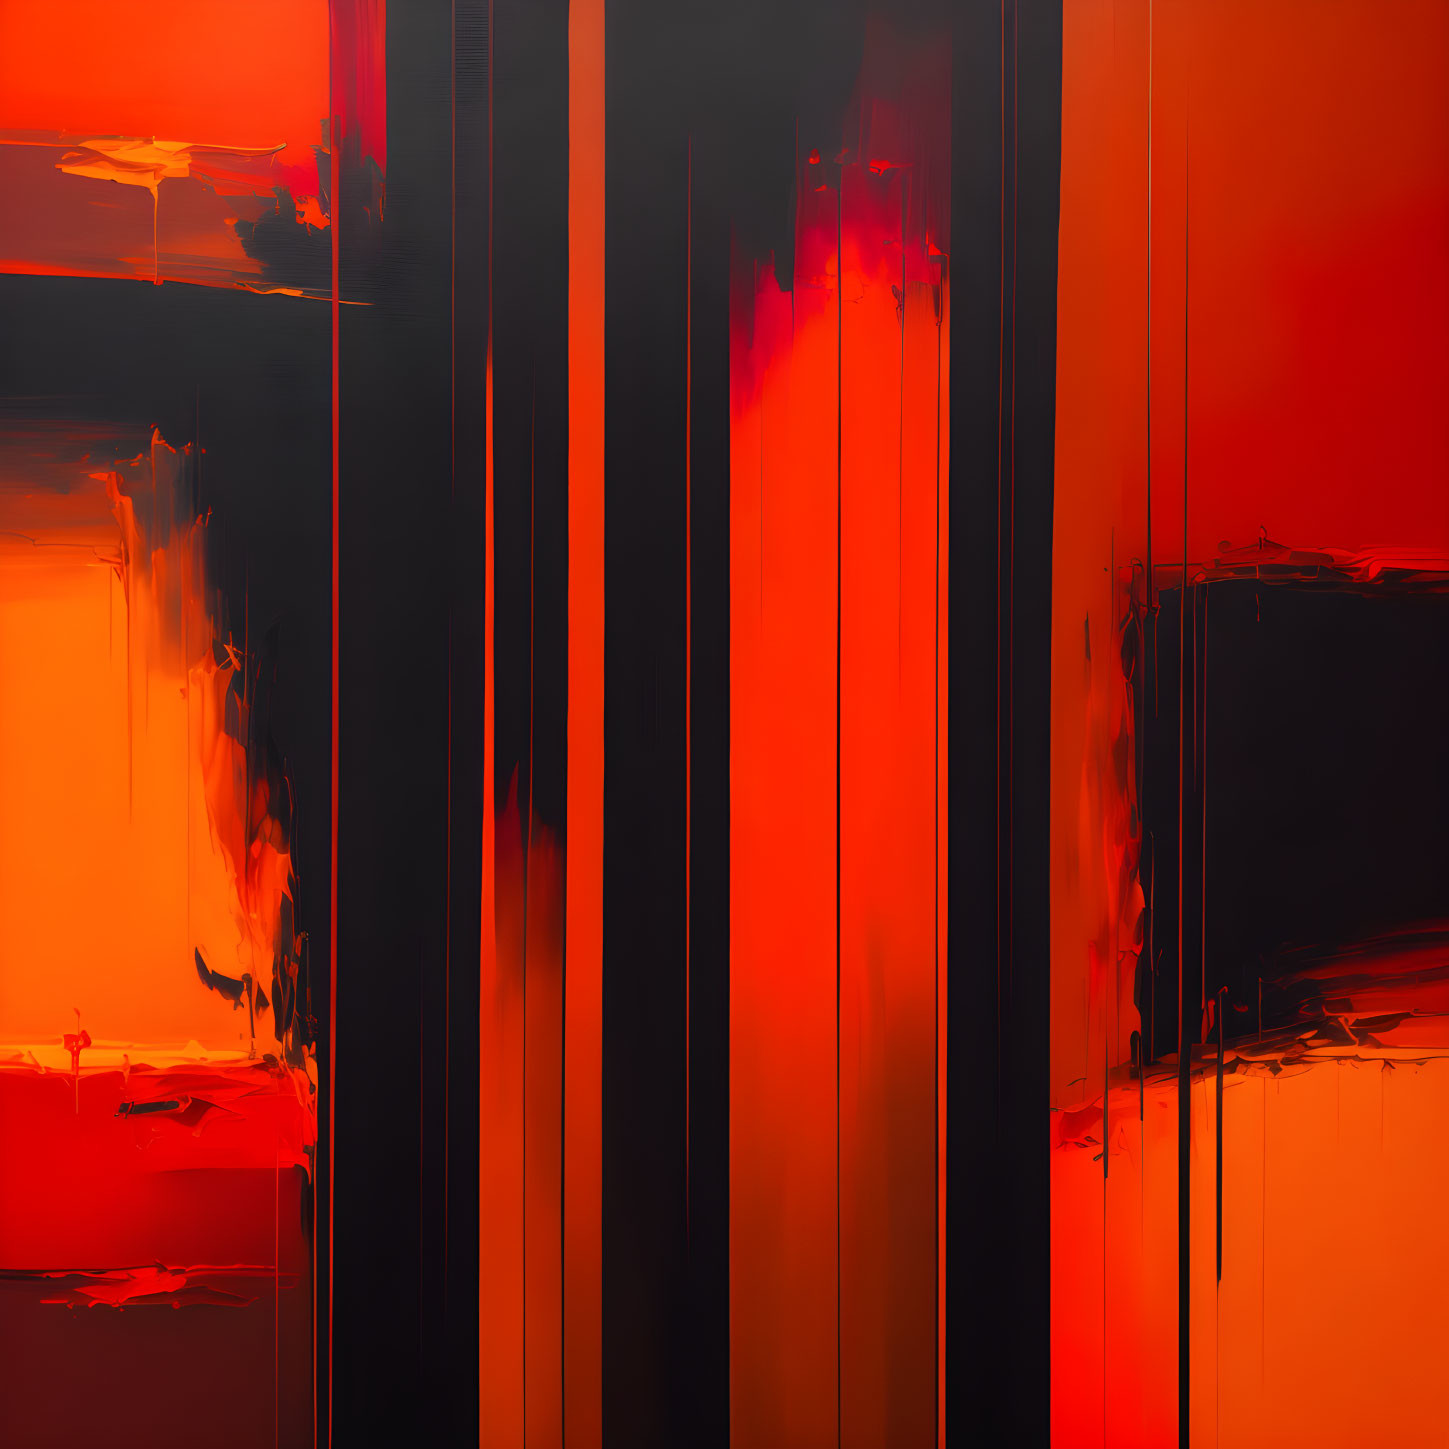 Vertical Streaks in Orange and Red Abstract Digital Art